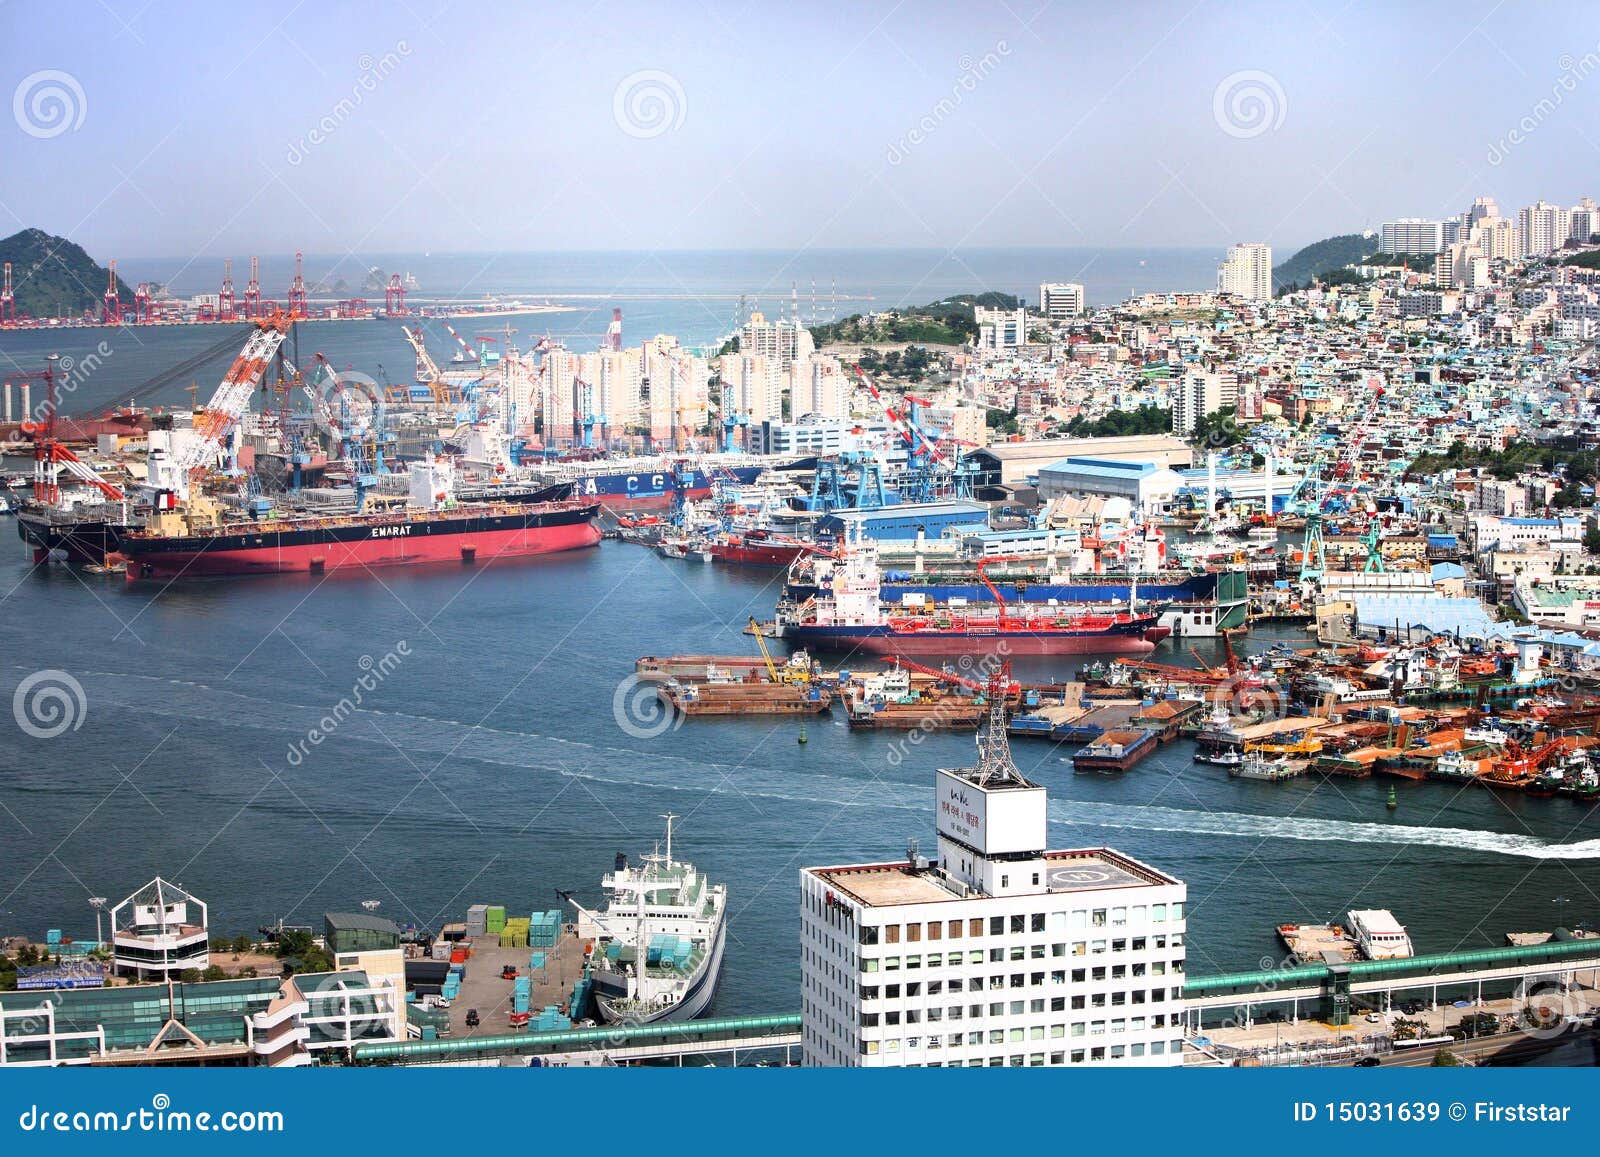 Busan South Korea Industrial Harbor Editorial Stock Image 